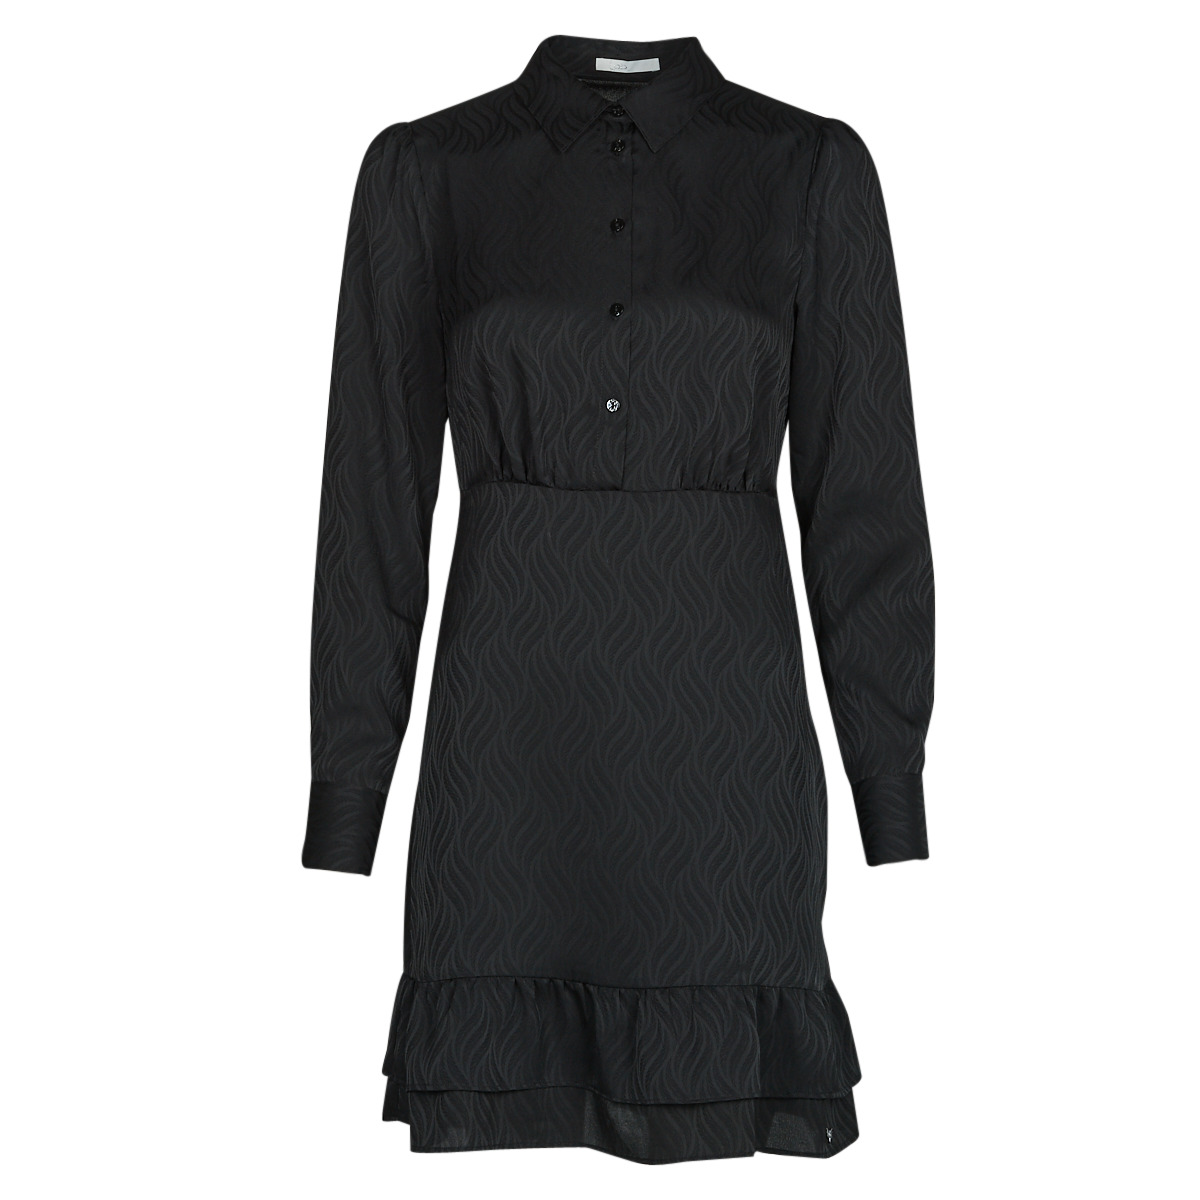 Textil Ženy Krátké šaty Les Petites Bombes CLARIE Černá